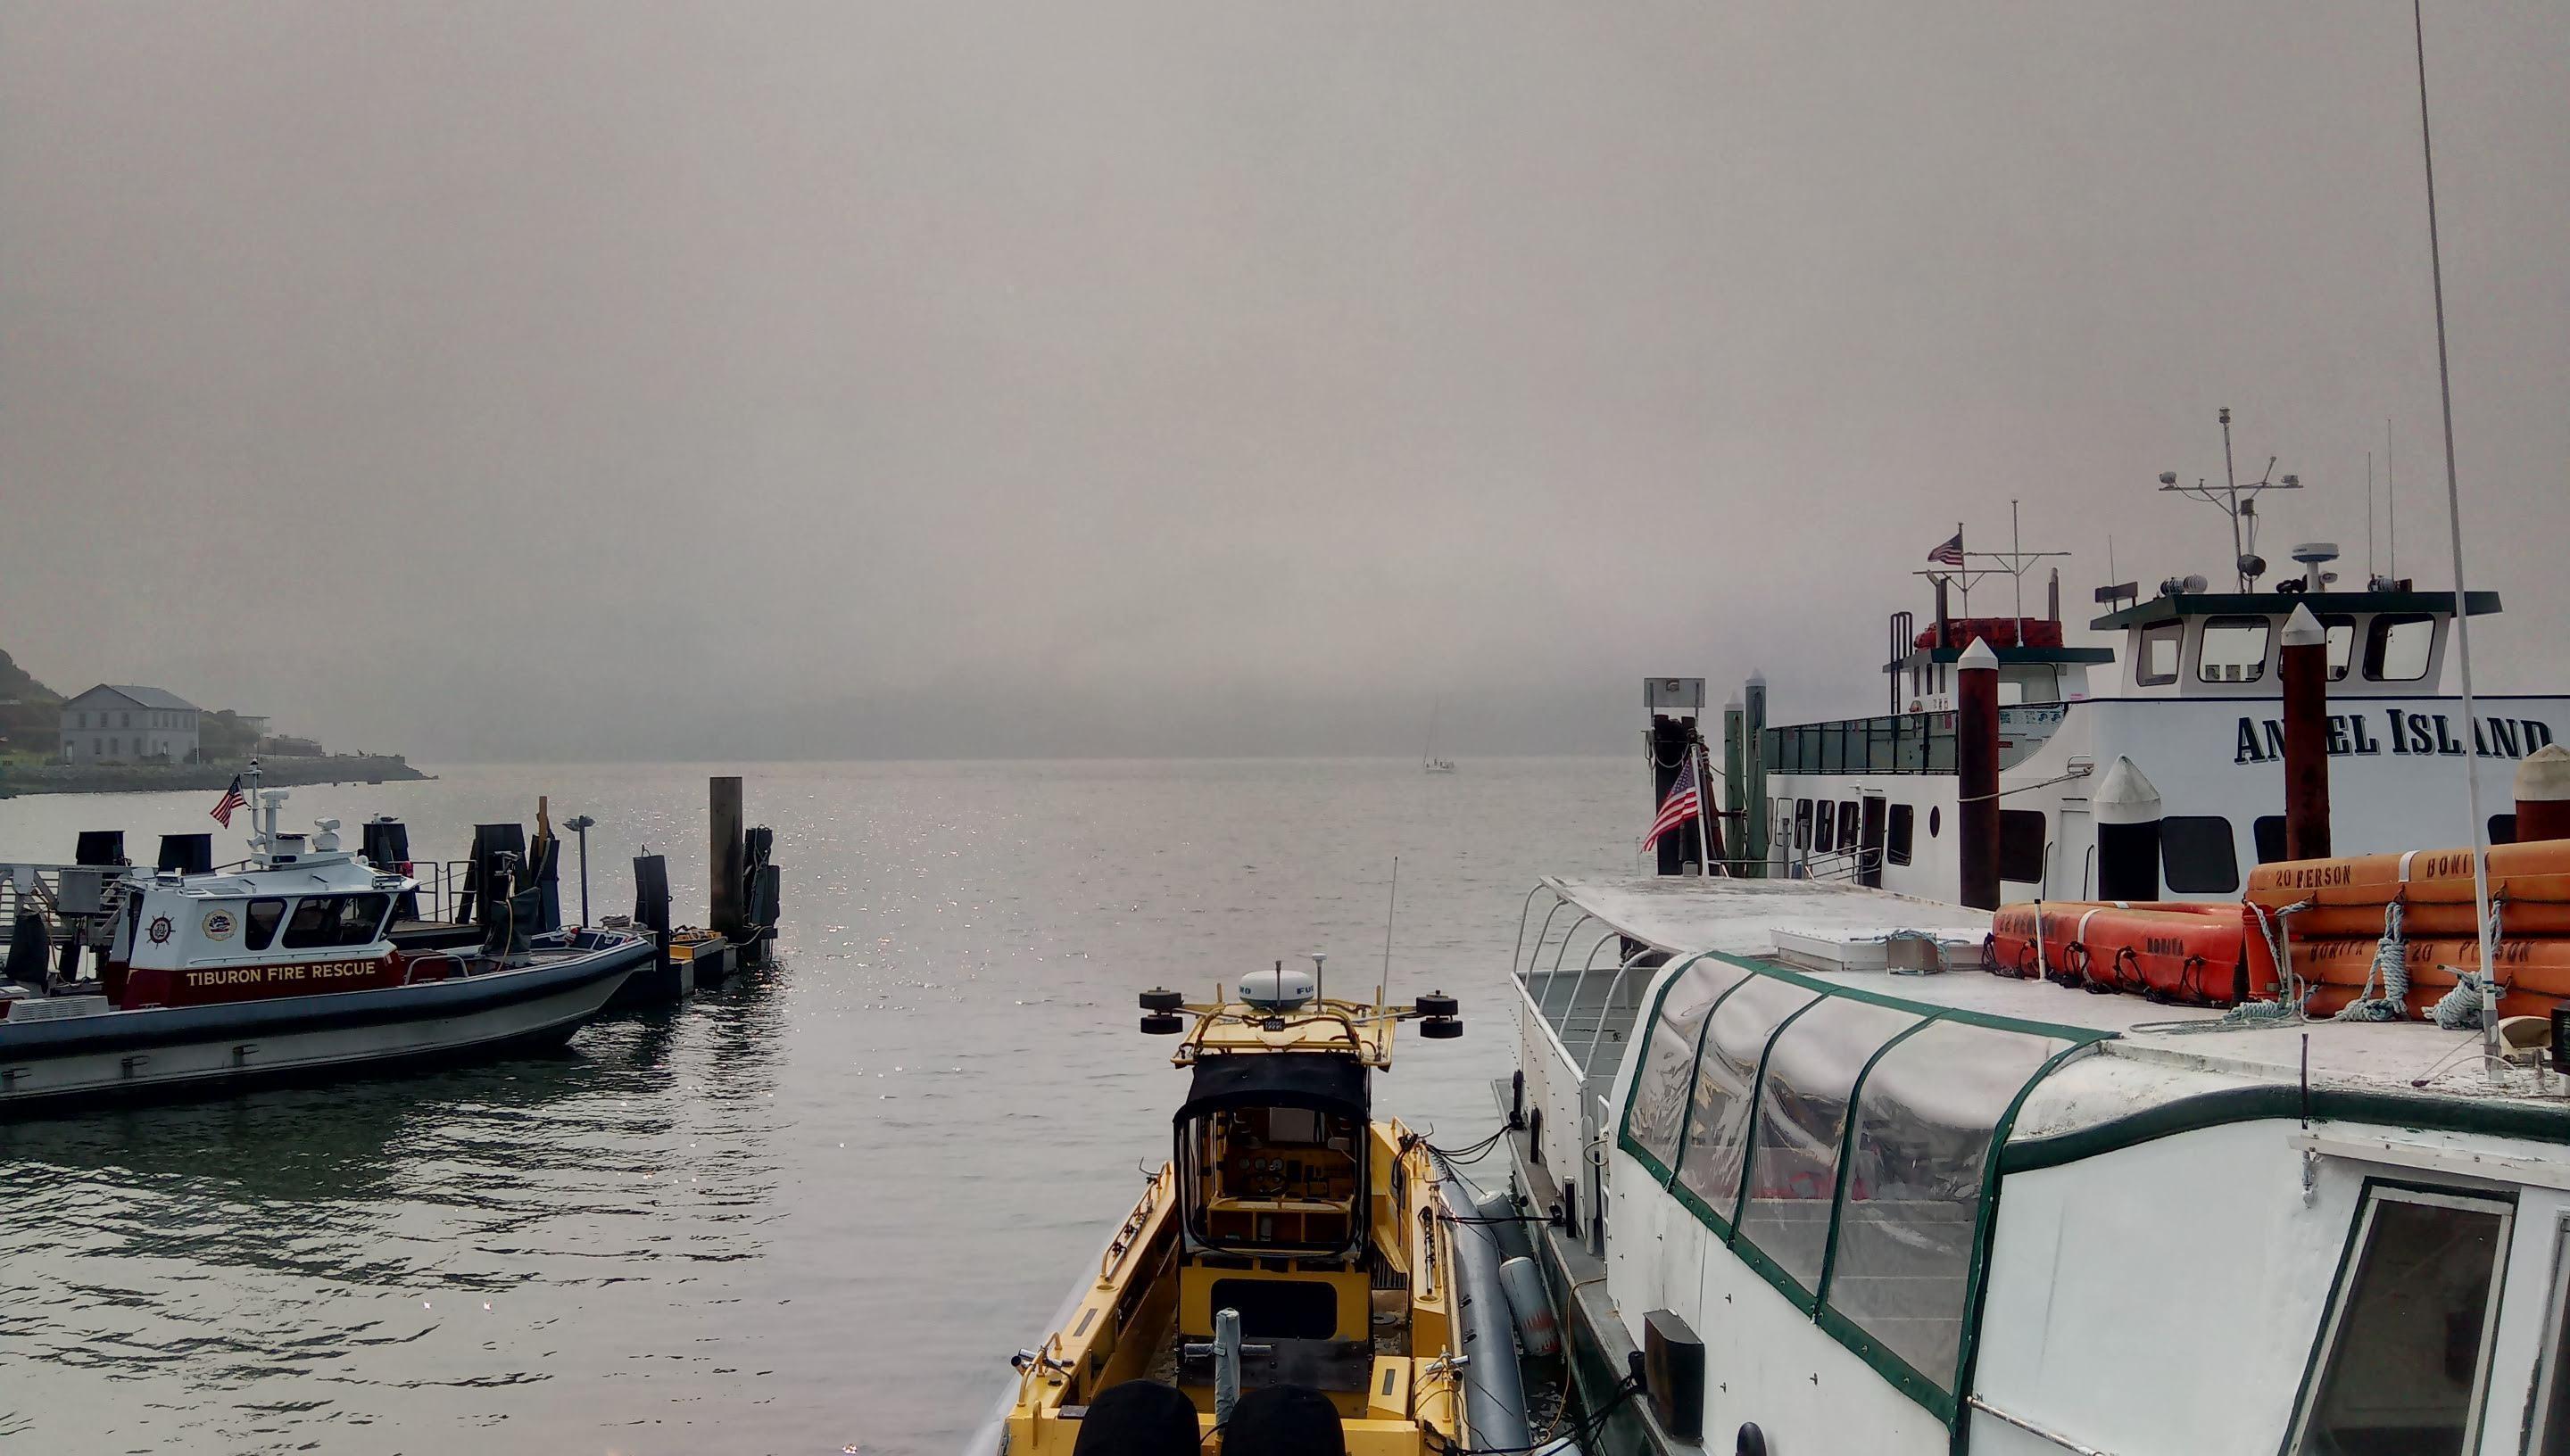 Angel Island pier. Smog and fog are hiding Angel Island